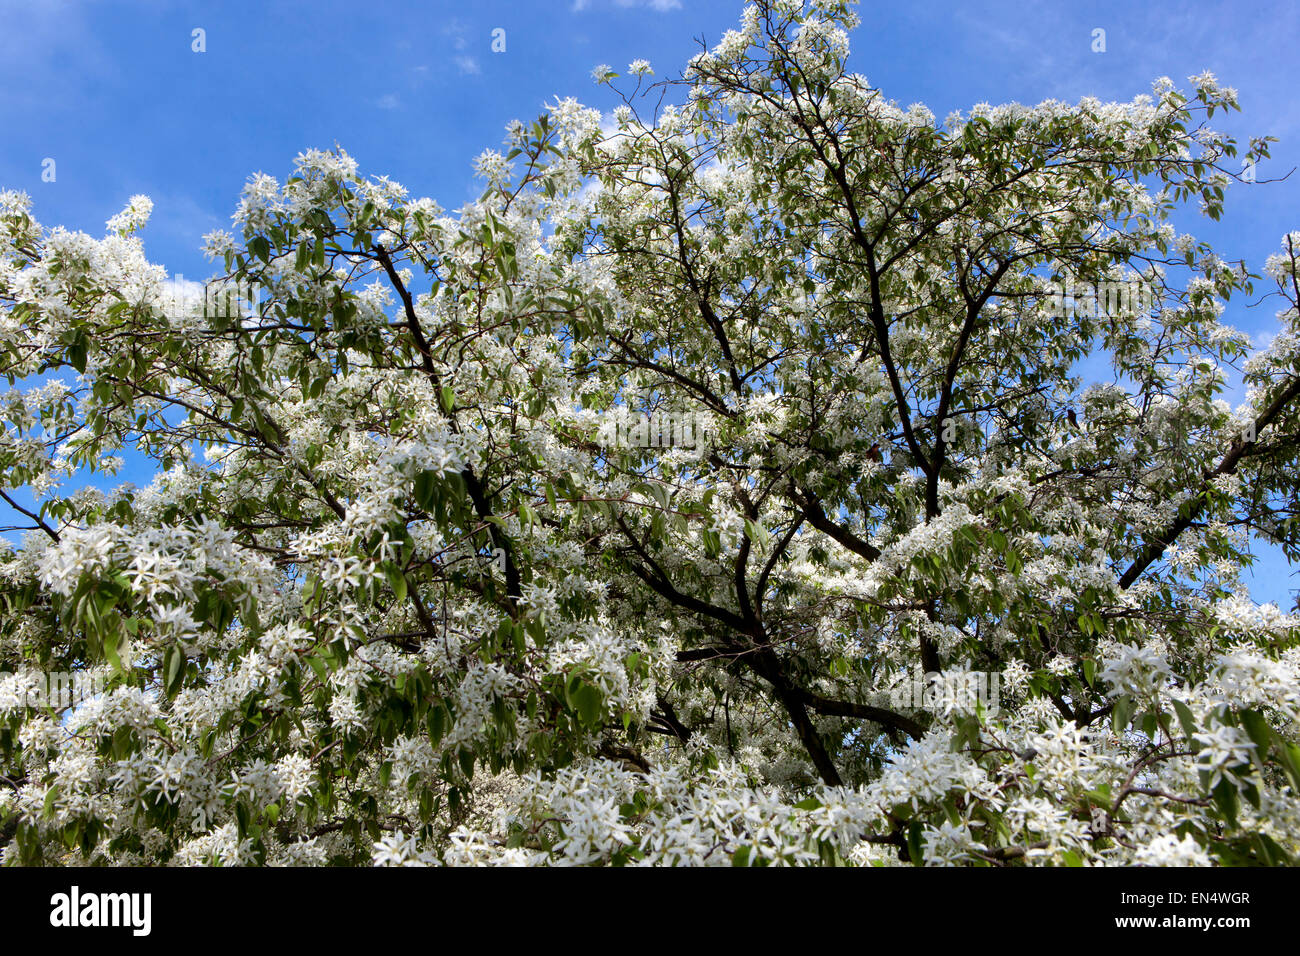 Amelanchier lamarckii Juneberrry flowering shrub, Snowy mespilus tree blooming Stock Photo